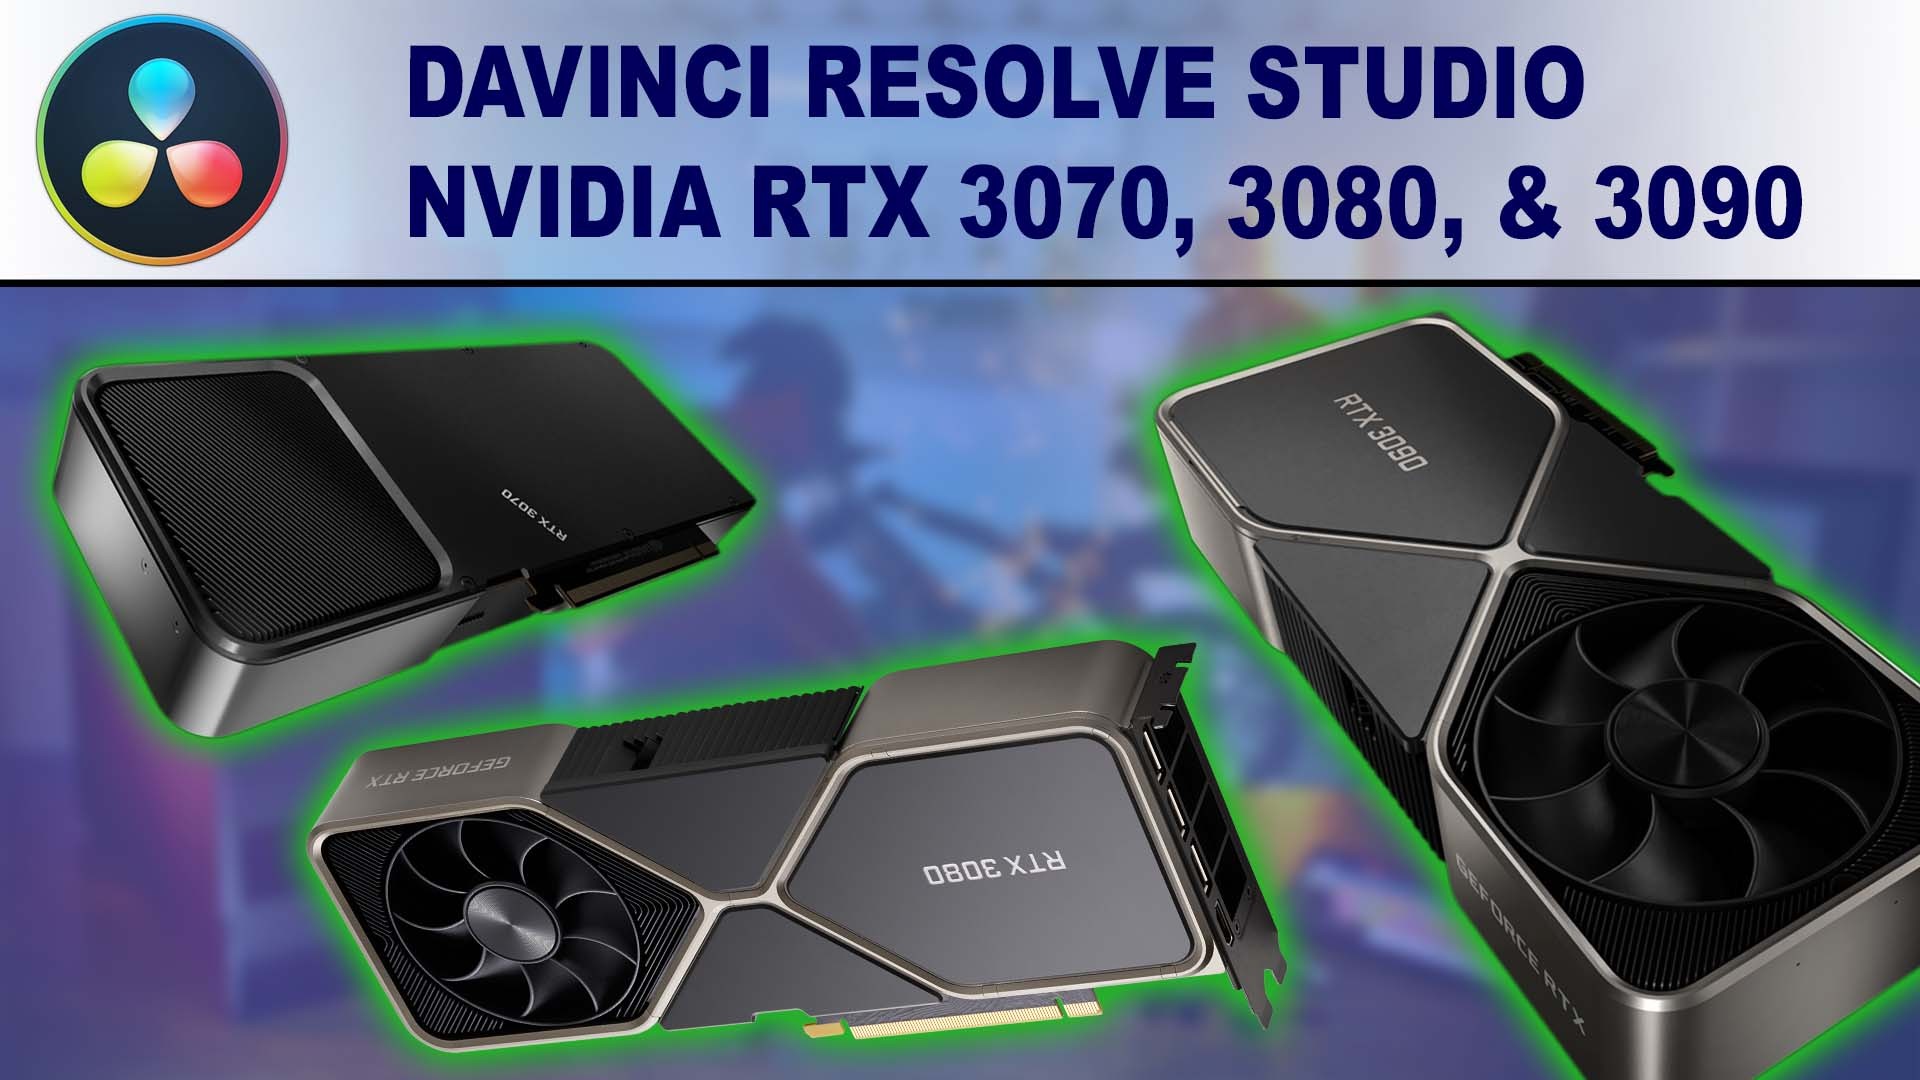 DaVinci Resolve Studio GPU Performance Benchmark - NVIDIA GeForce RTX 3070 8GB, RTX 3080 10GB & RTX 3090 24GB